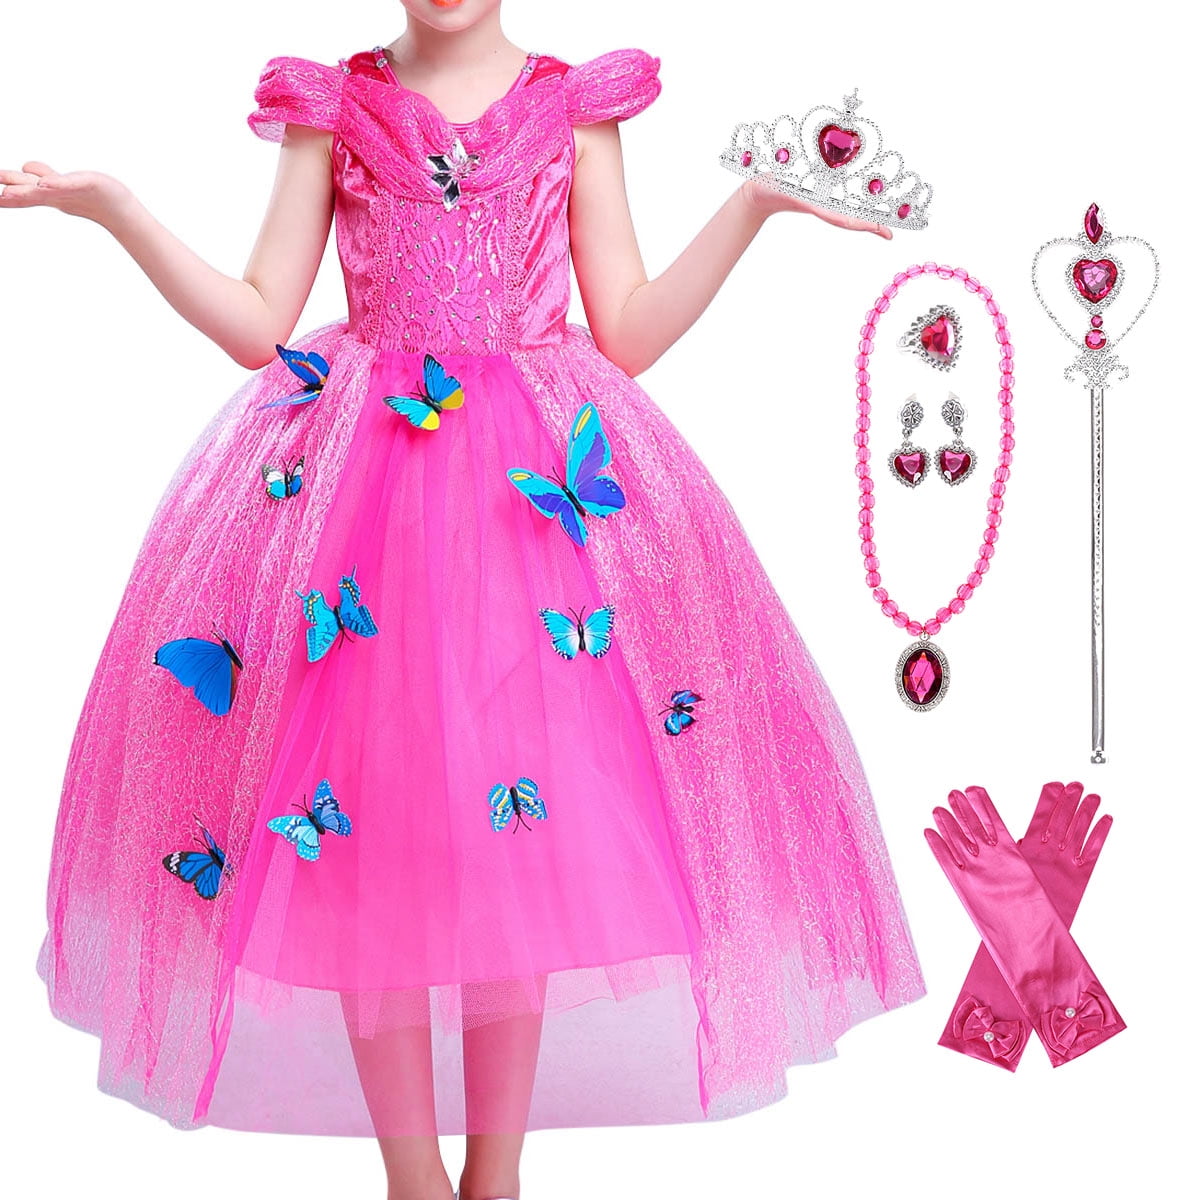 Cinderella Dress Princess Costume Halloween Party Dress up 